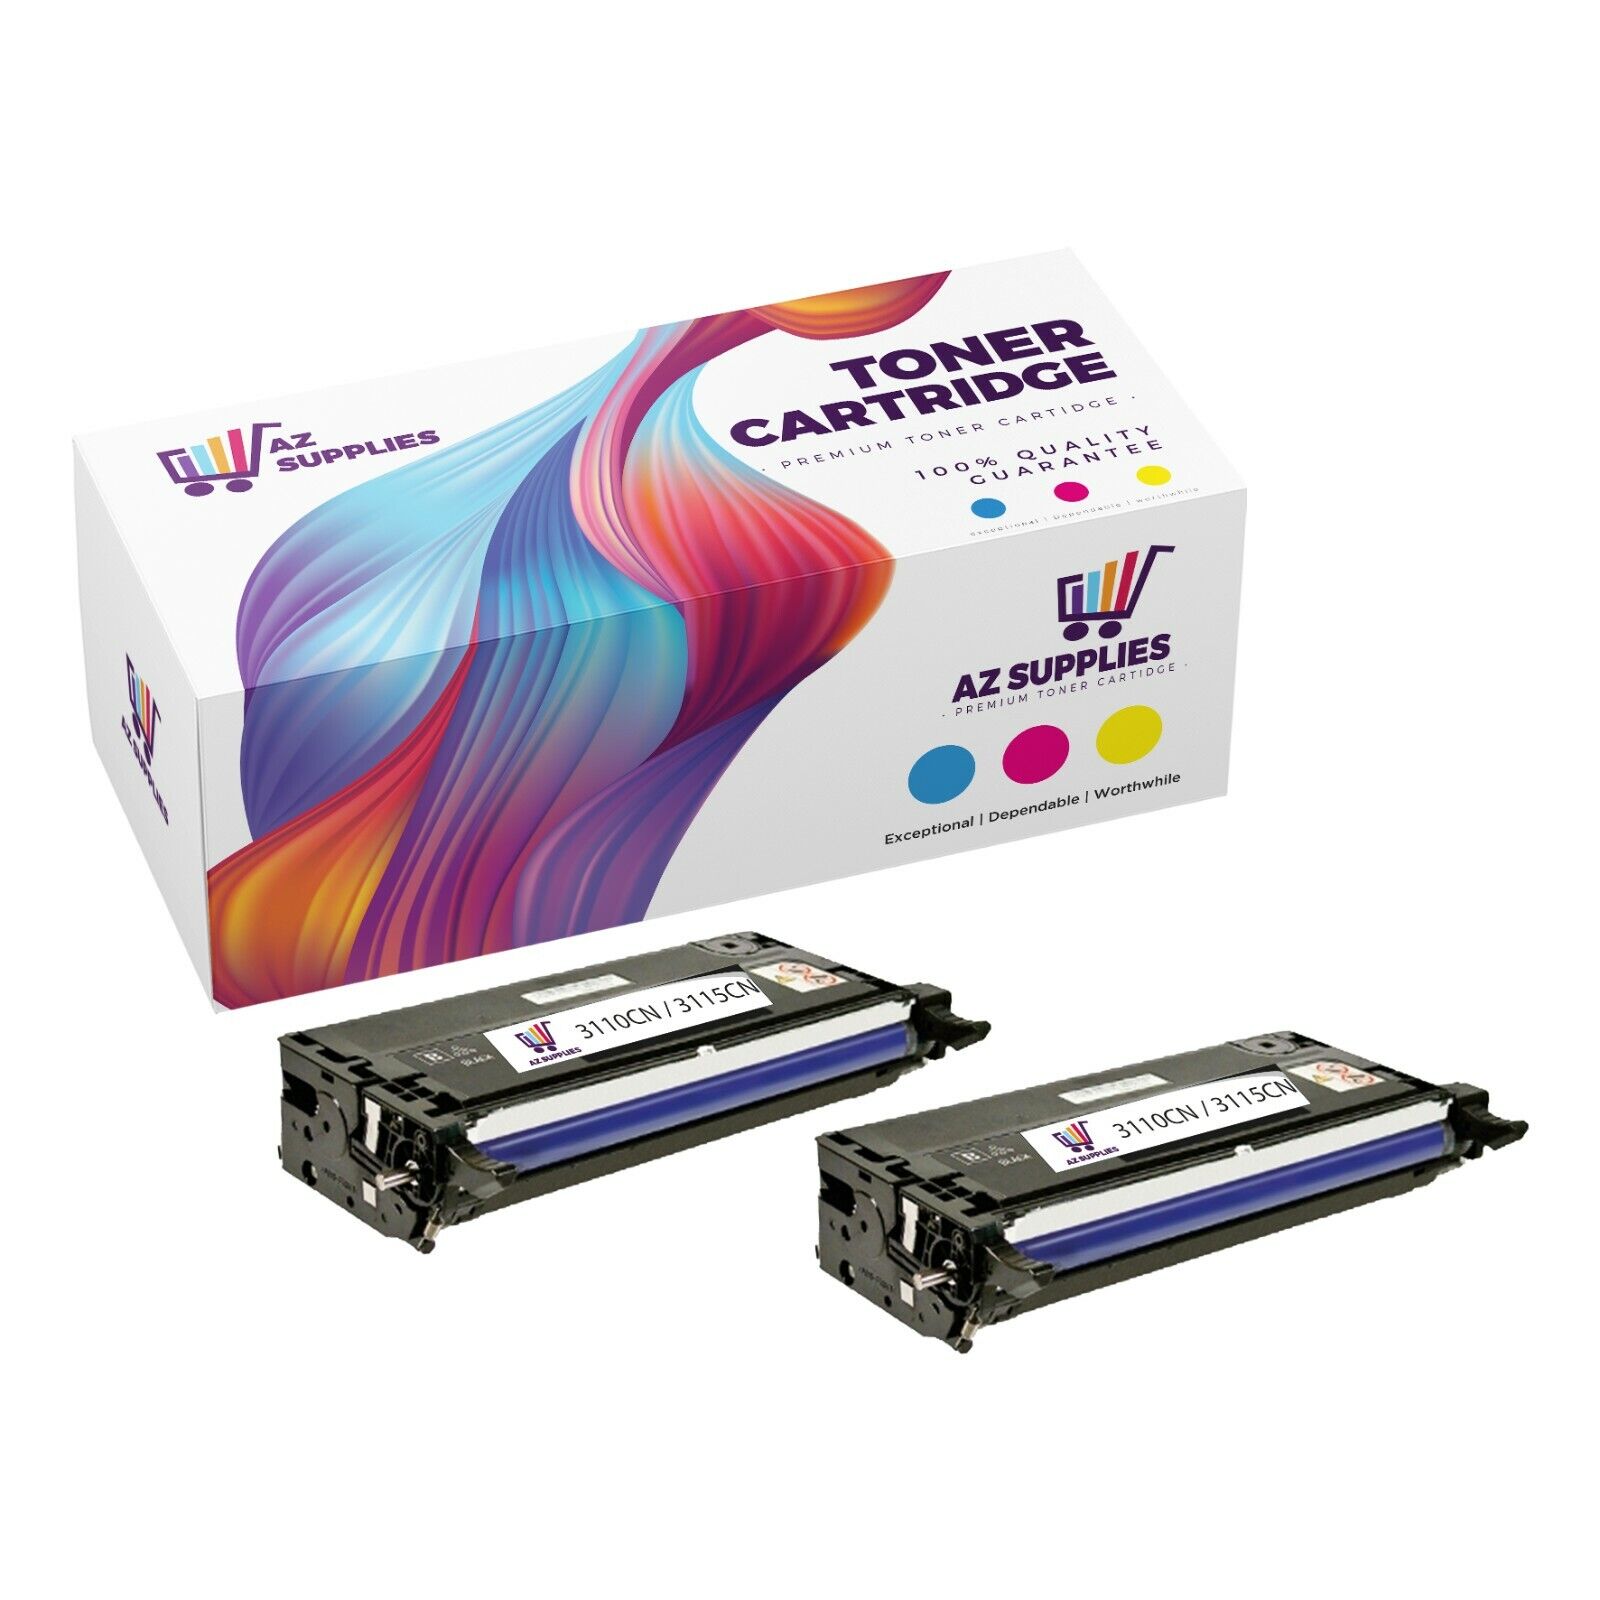 DELL Compatible Toner Cartridge for 3110CN / 3115CN 310-8092 310-8093 Black 2 PK